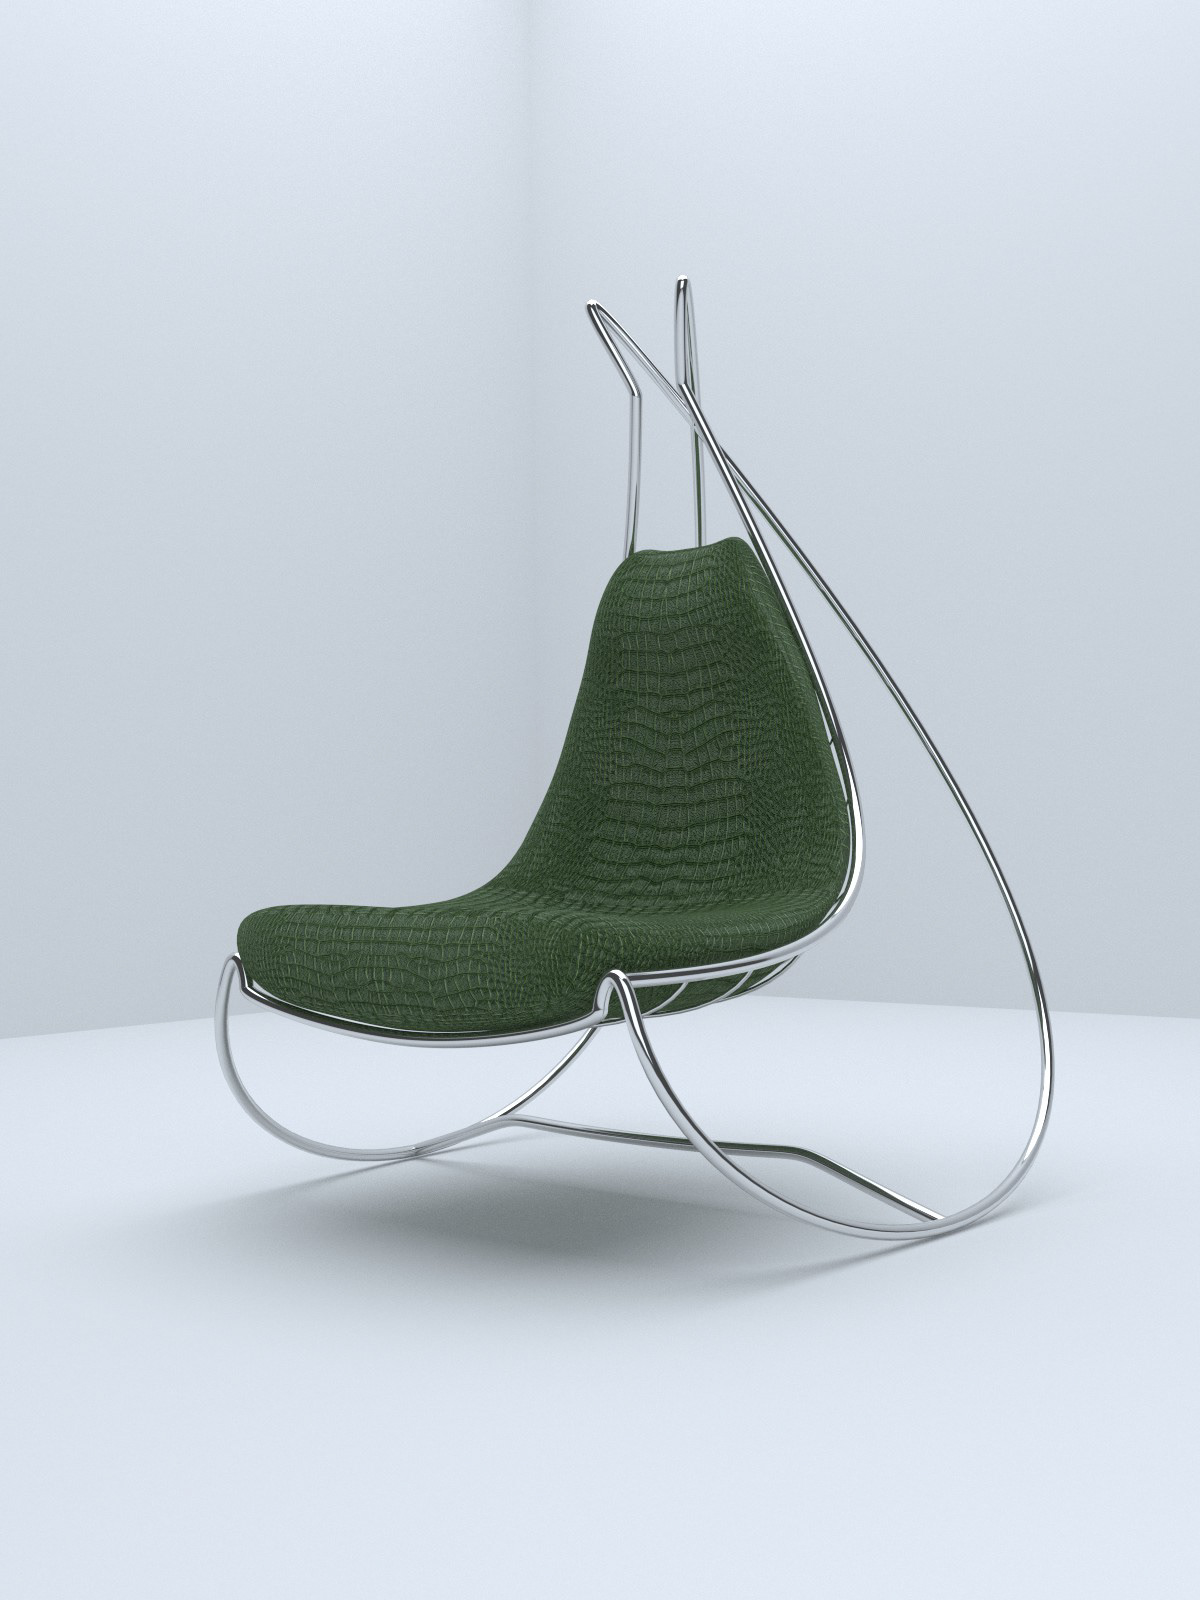 blender b3d b3dcycles 3D mobiliario furniture design diseño